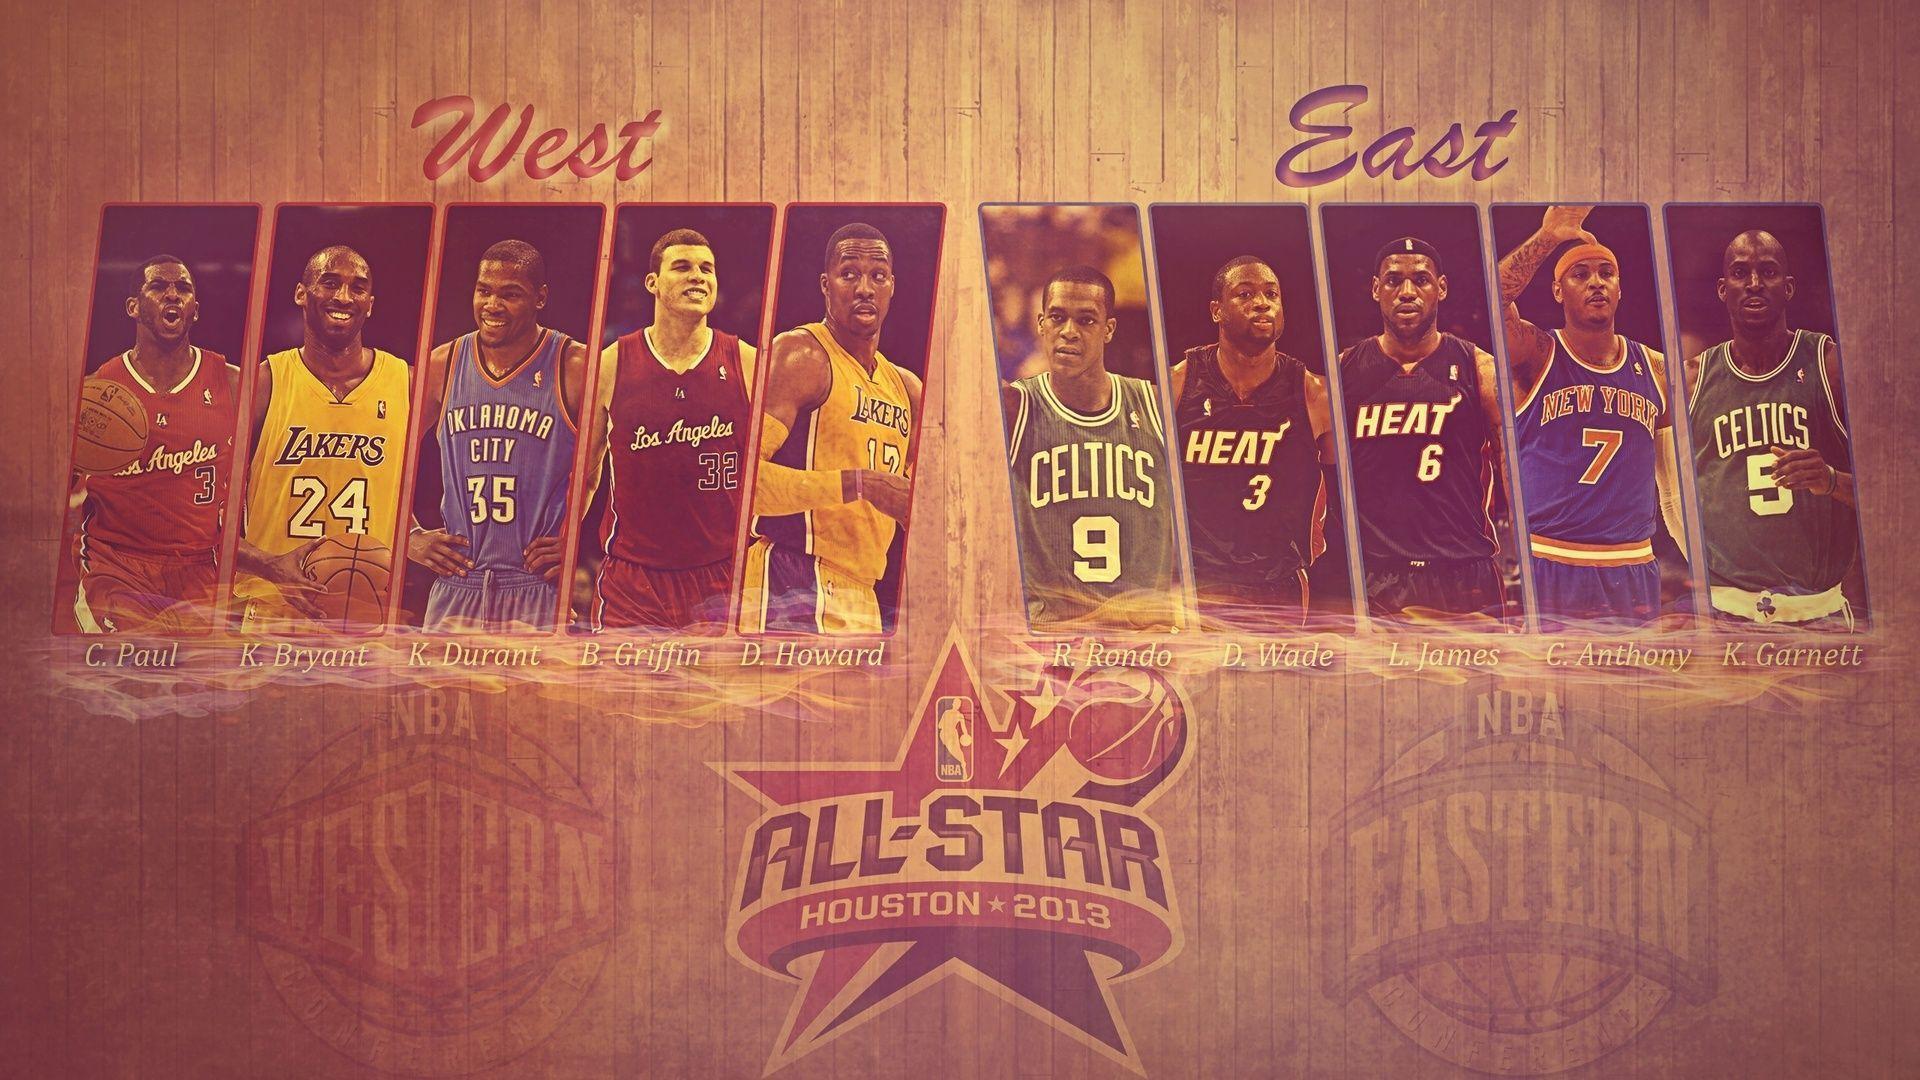 All Star, Kevin Durant, Nba, Basketball, West, Kobe